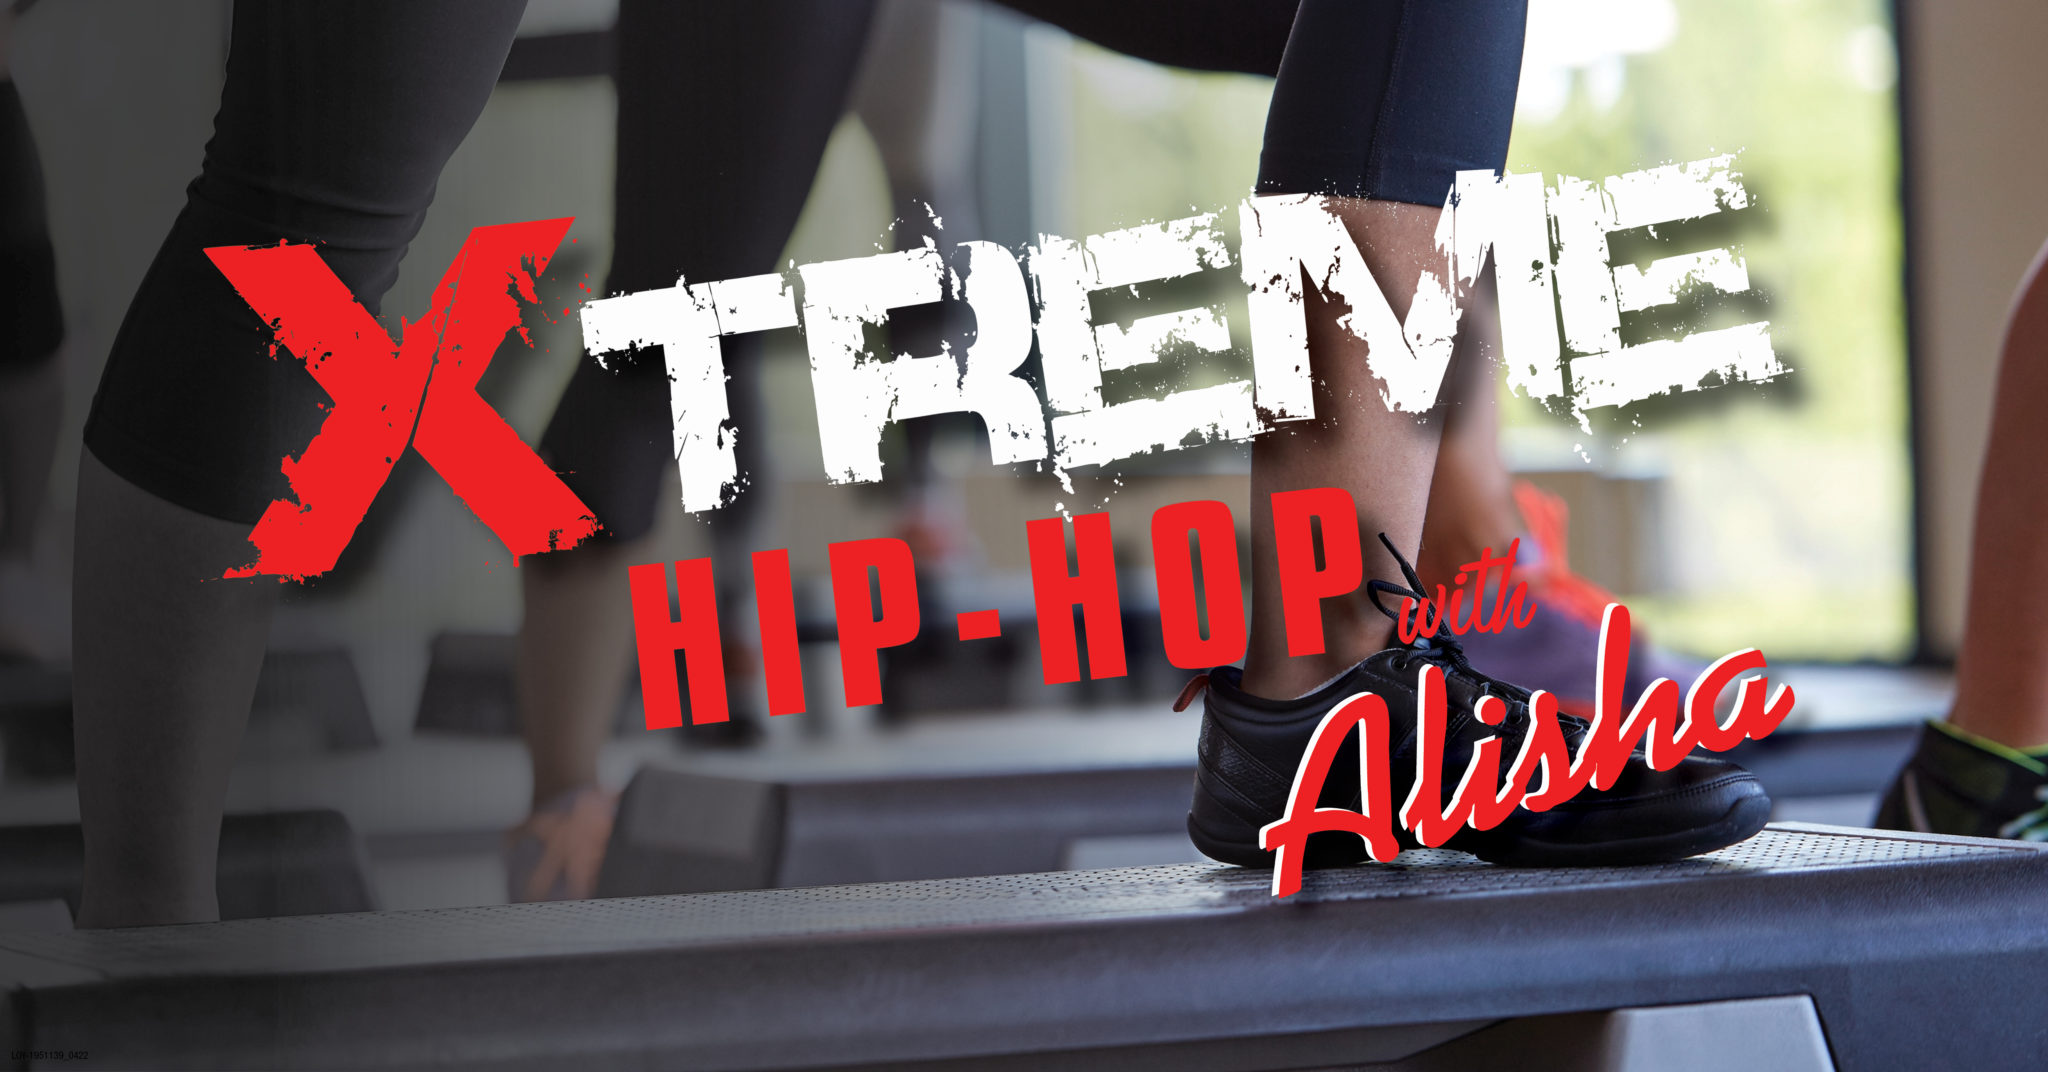 Xtreme Hip Hop with Alisha